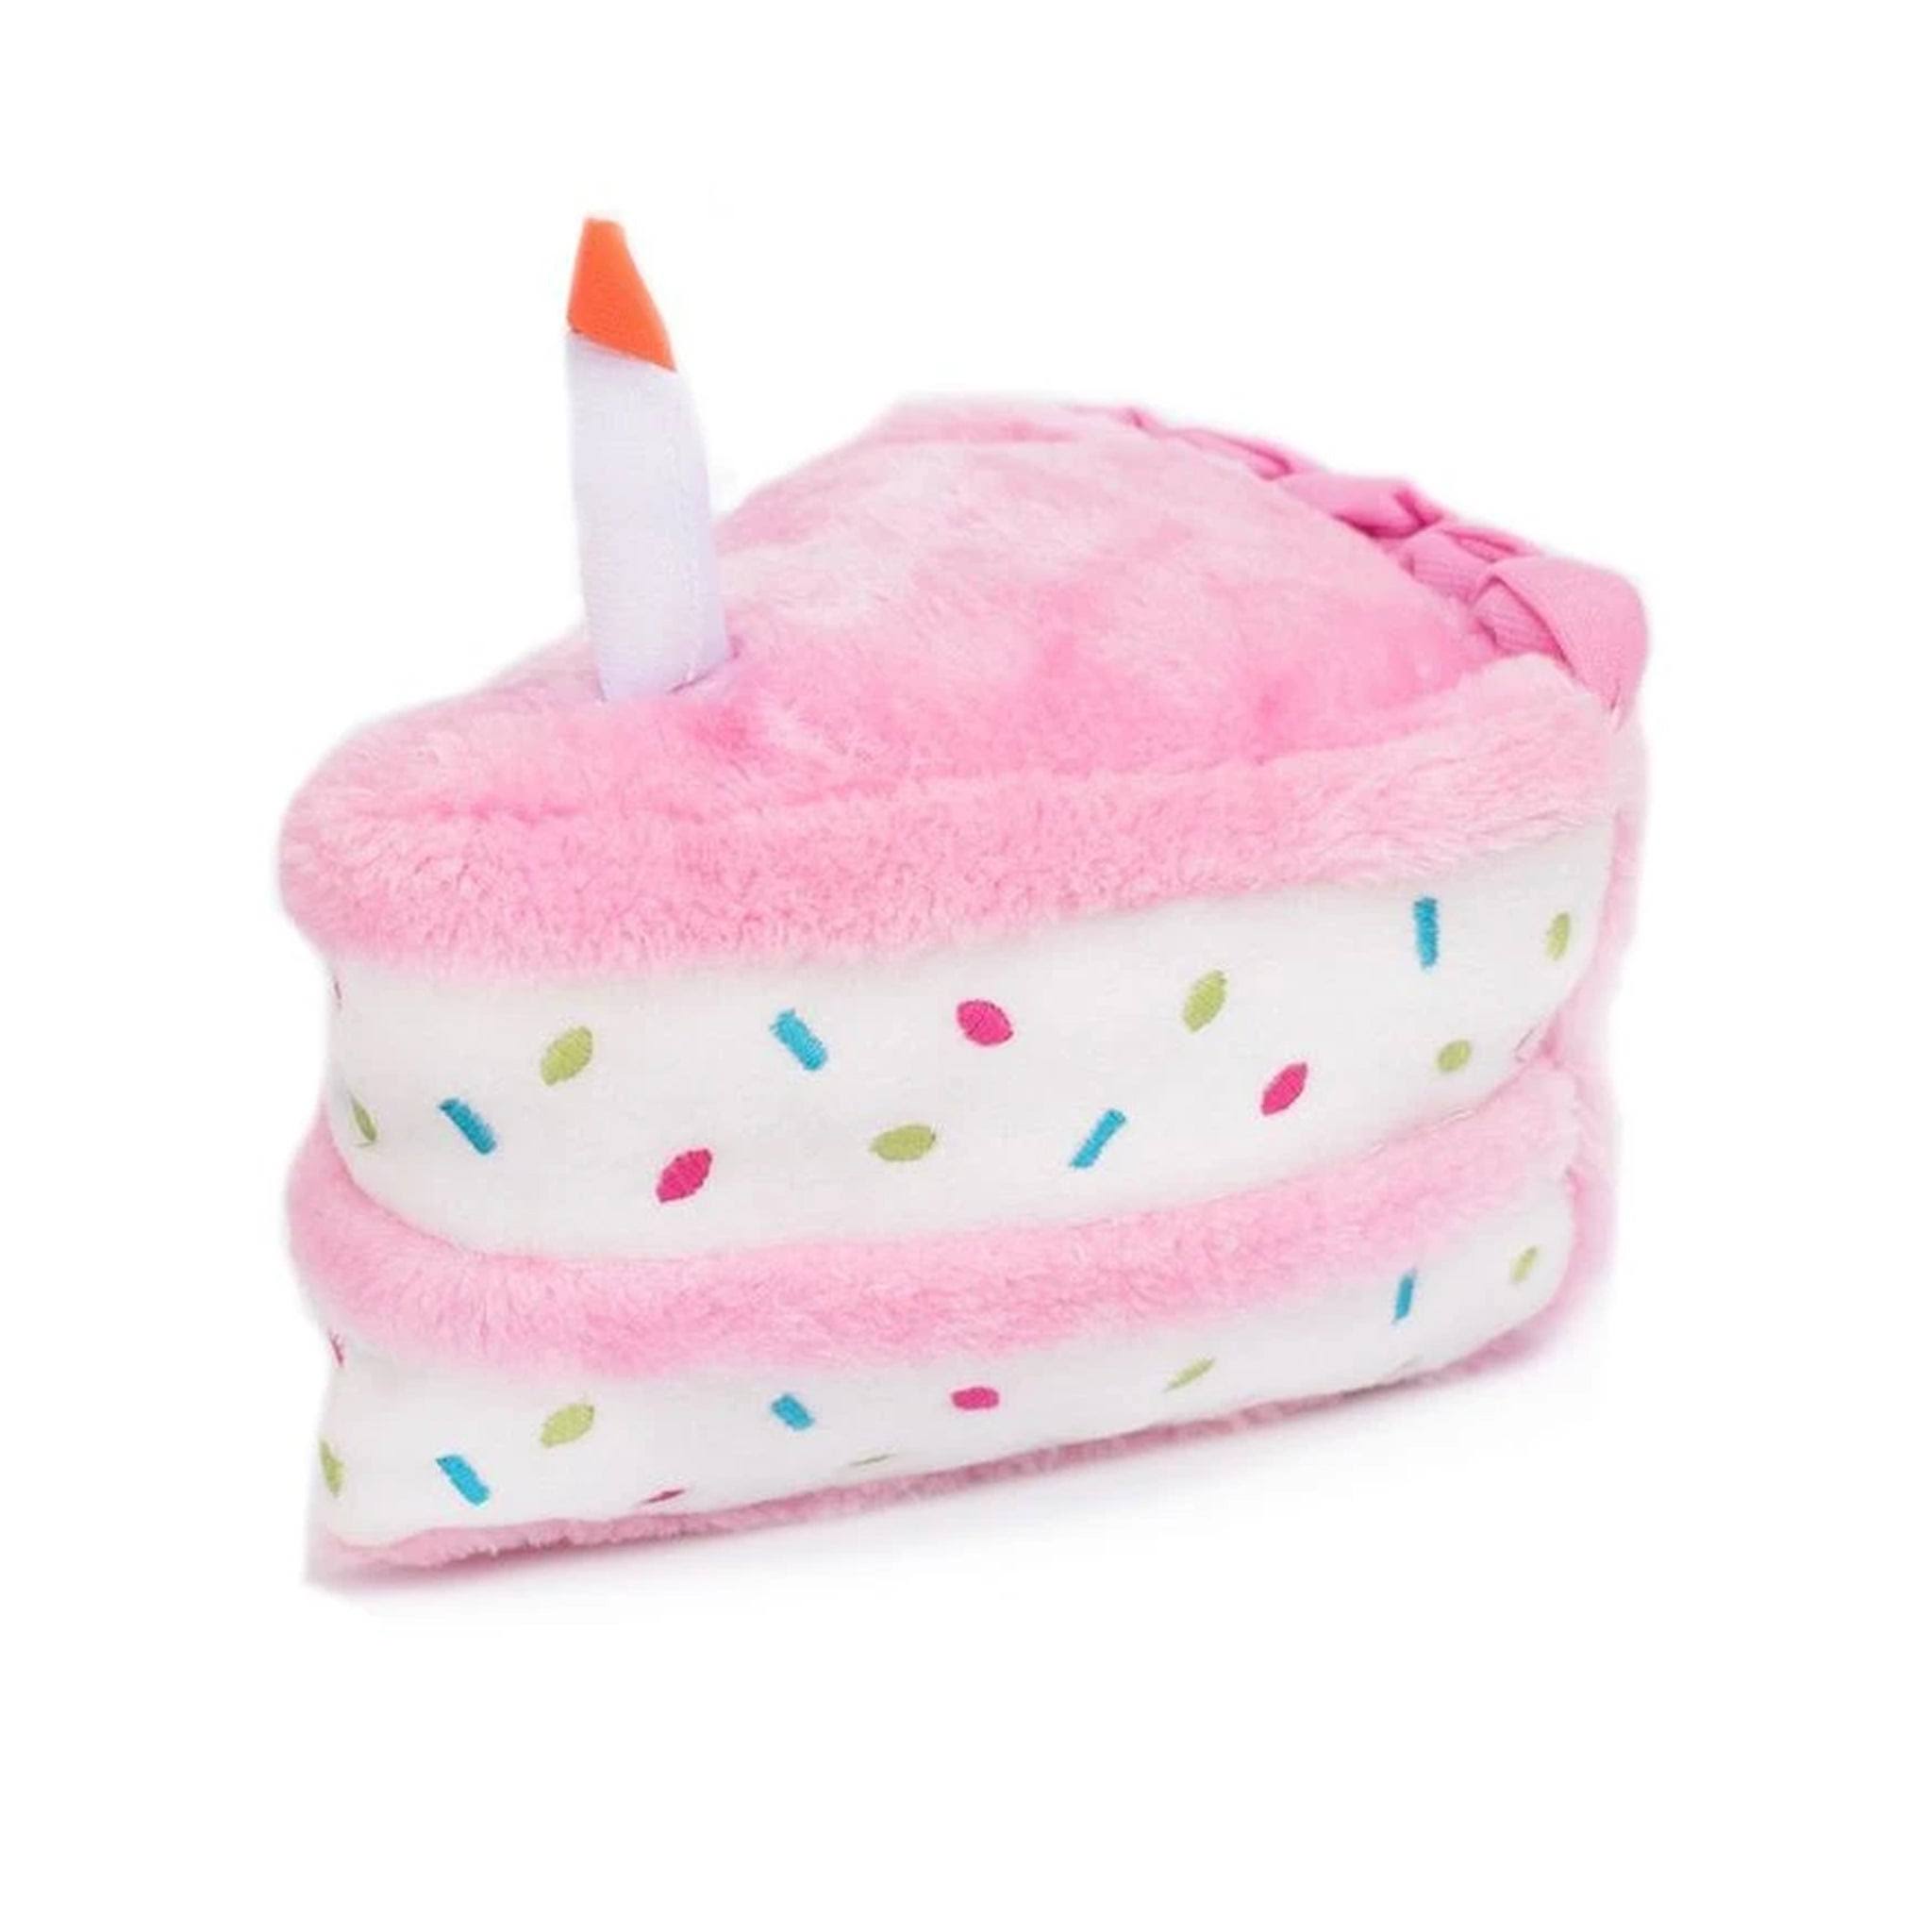 ZippyPaws Birthday Cake Squeaker Toy Pink